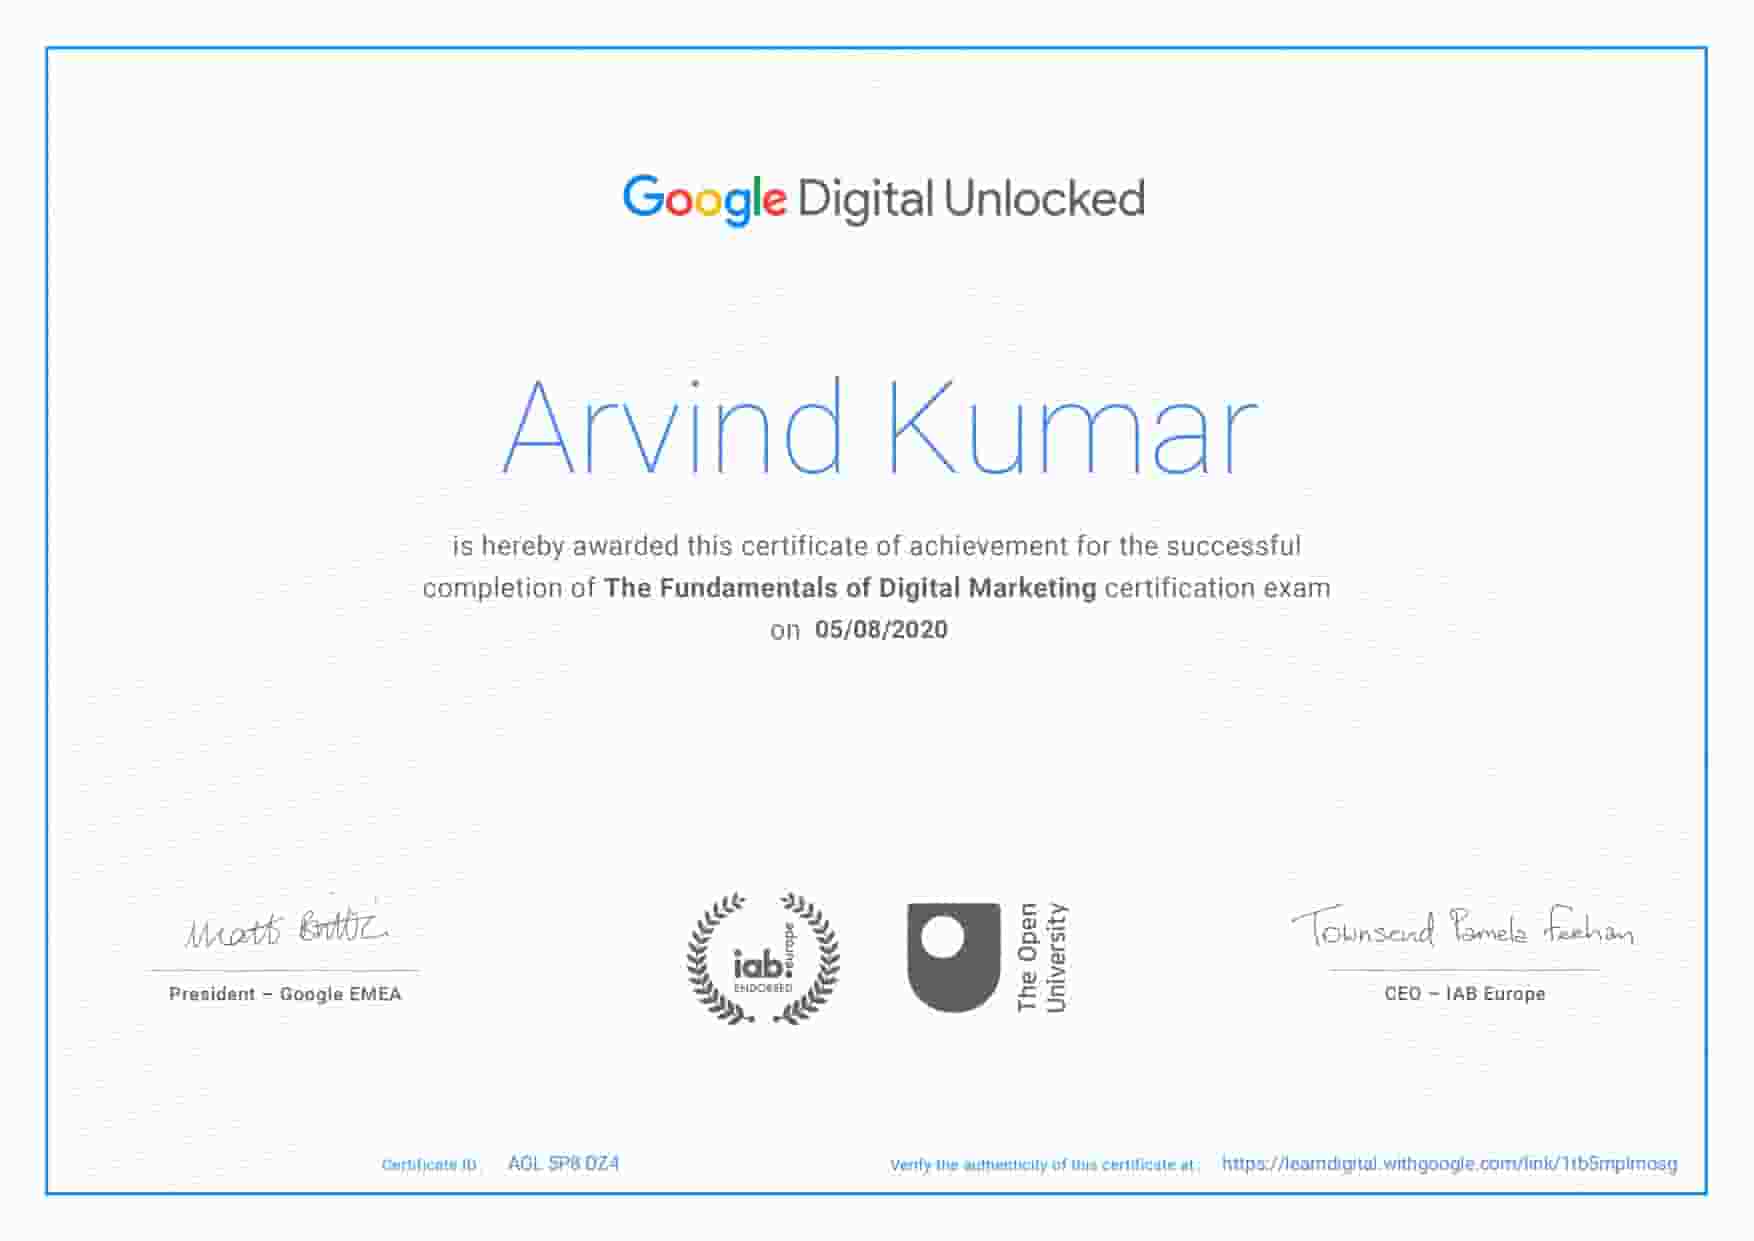 Google the Fundamentals of Digital Marketing